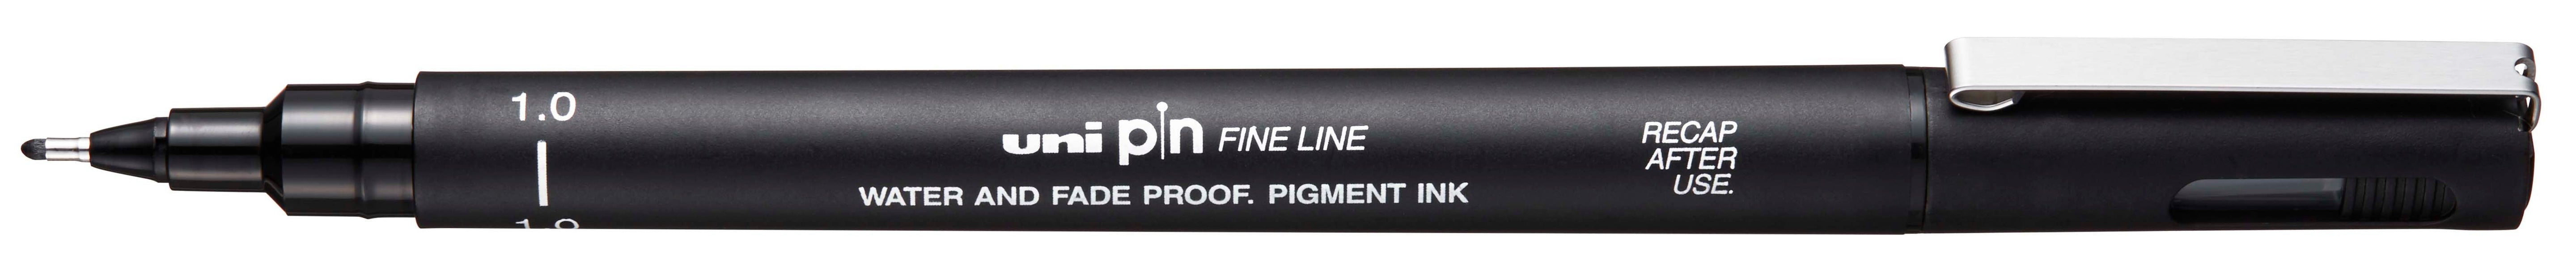 Uni Pin Fine Line Black Waterproof Drawing Pen. The Uni Pin pen range uses fade proof, waterproof pigment ink.